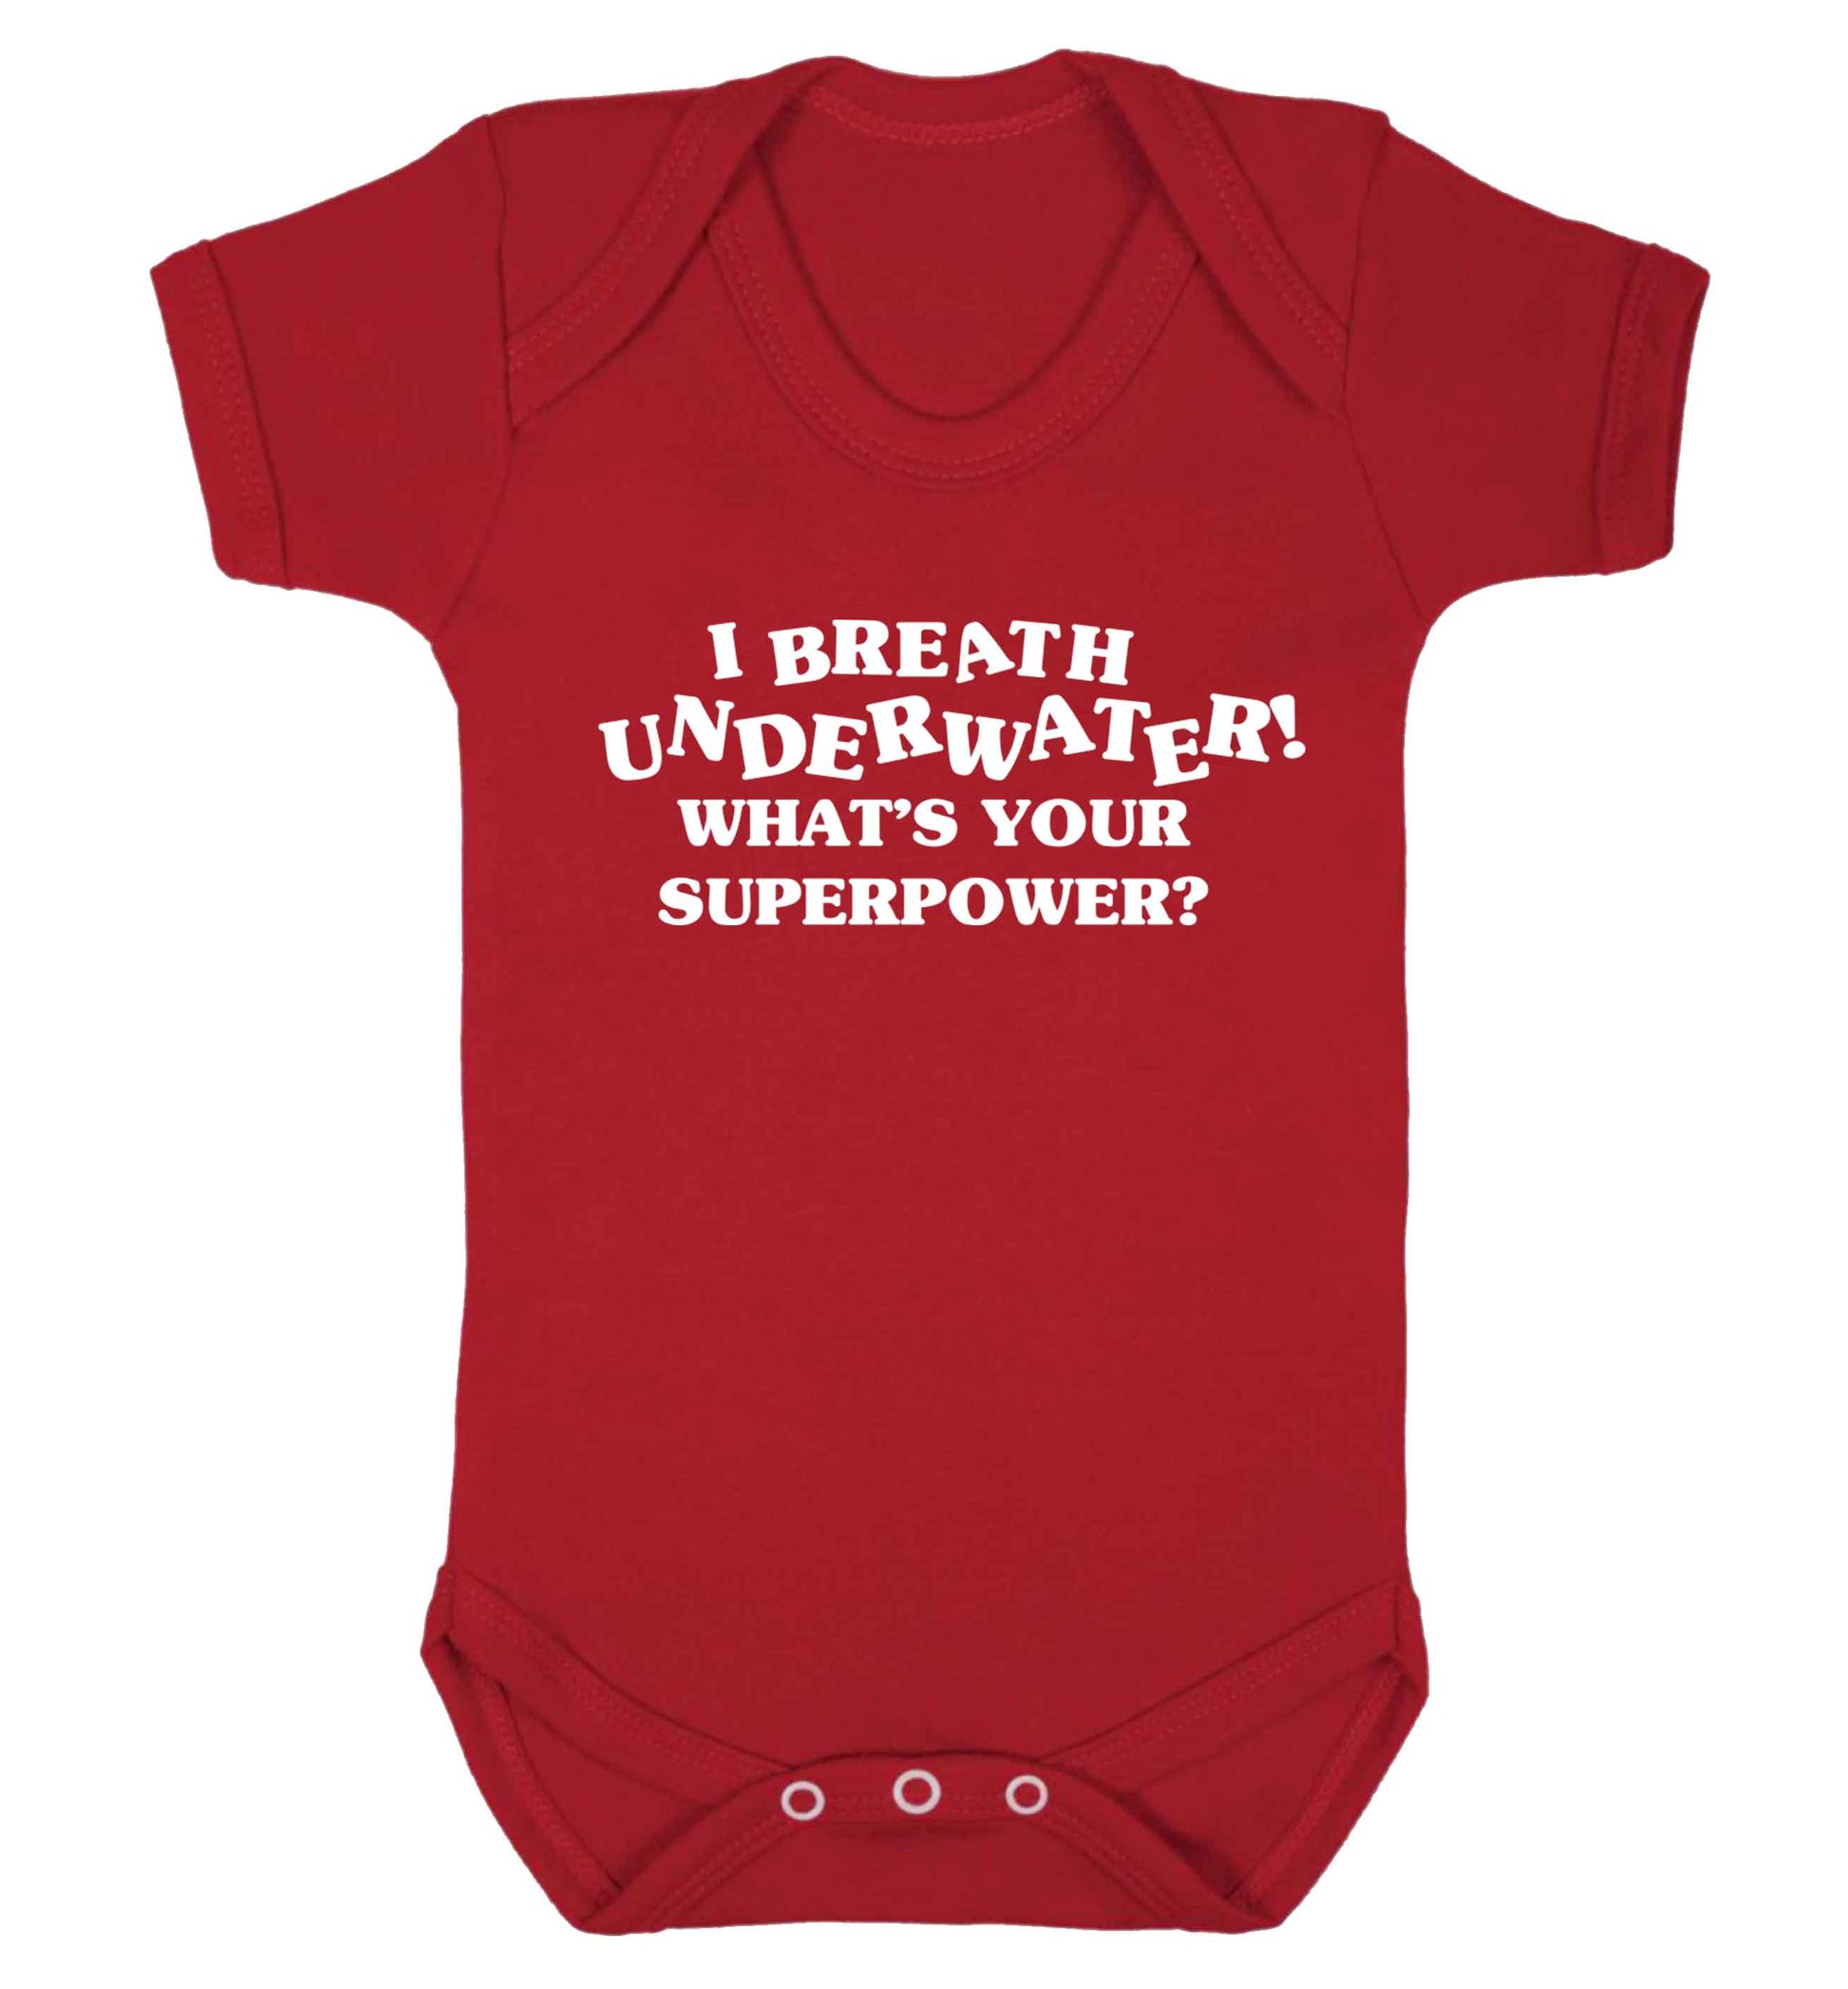 I breath underwater what's your superpower? Baby Vest red 18-24 months